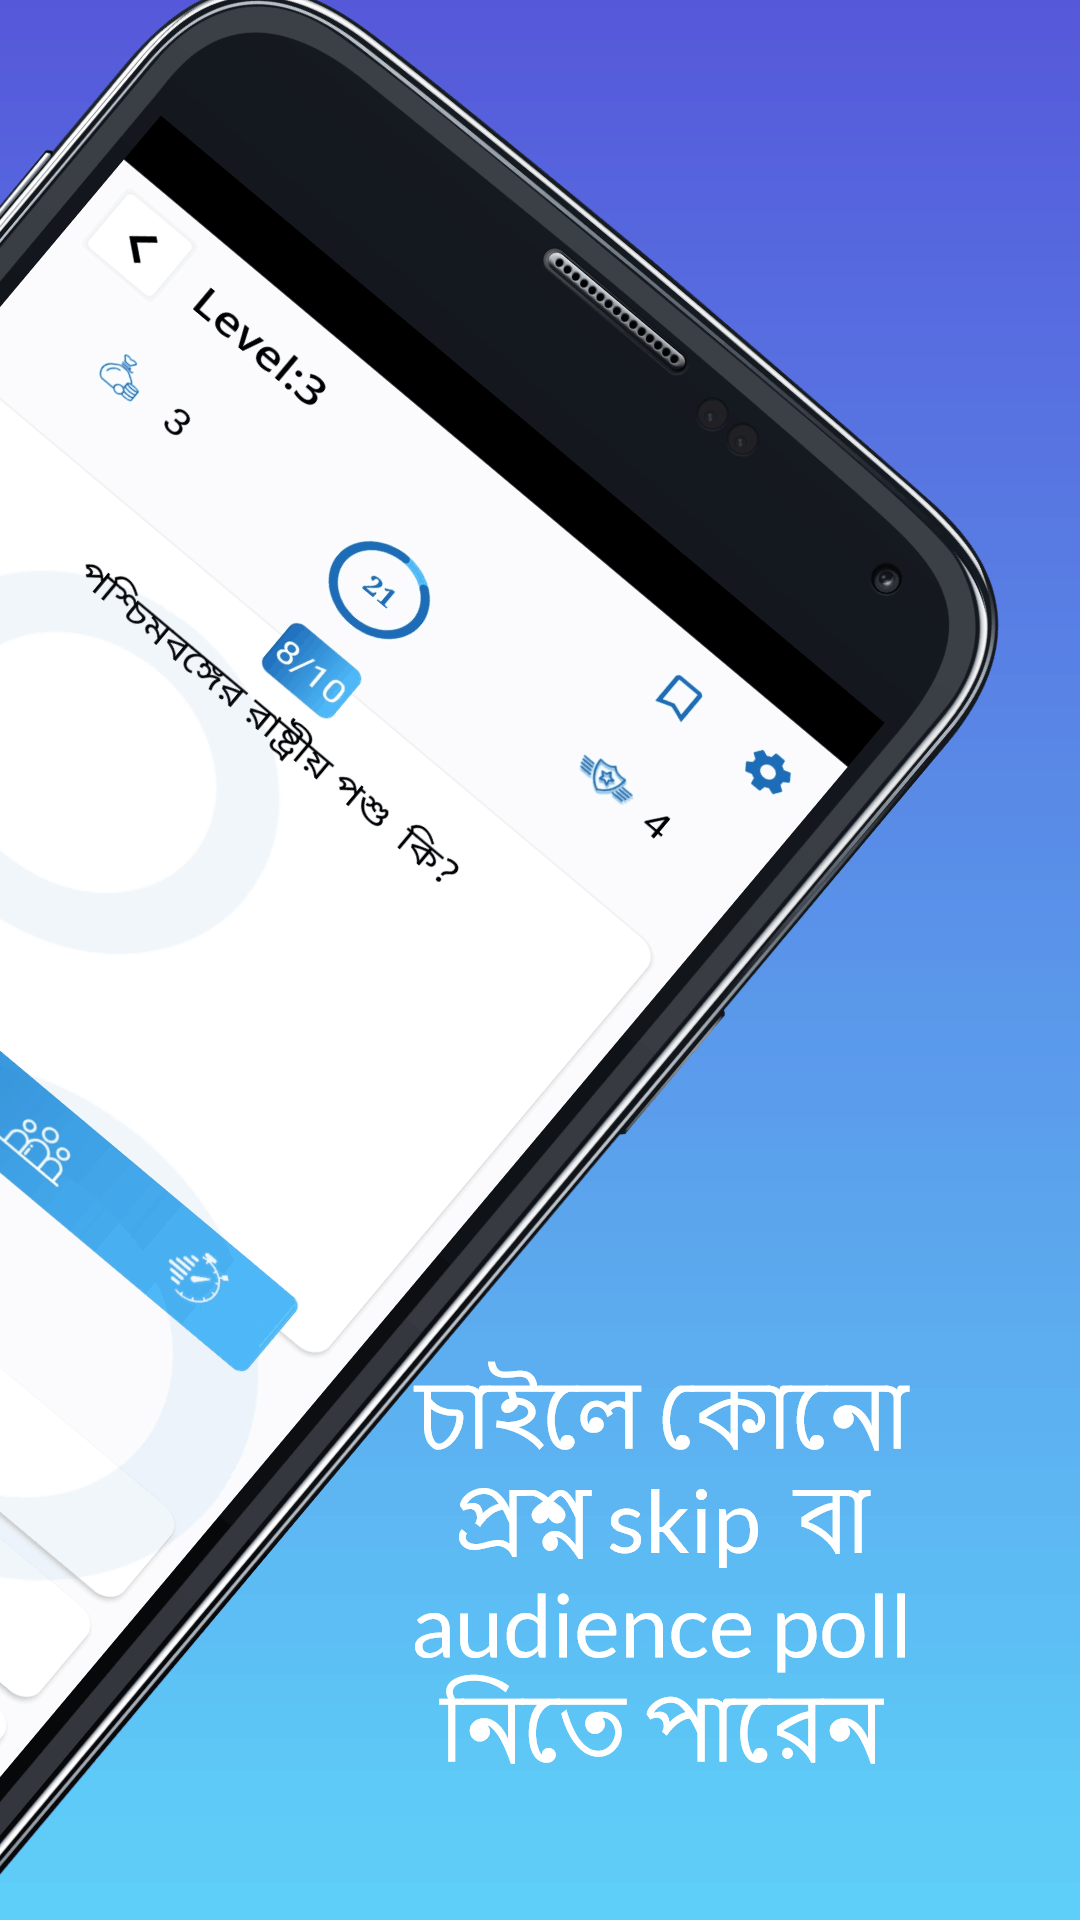 Bengali GK Quiz App for Govt. job preparation